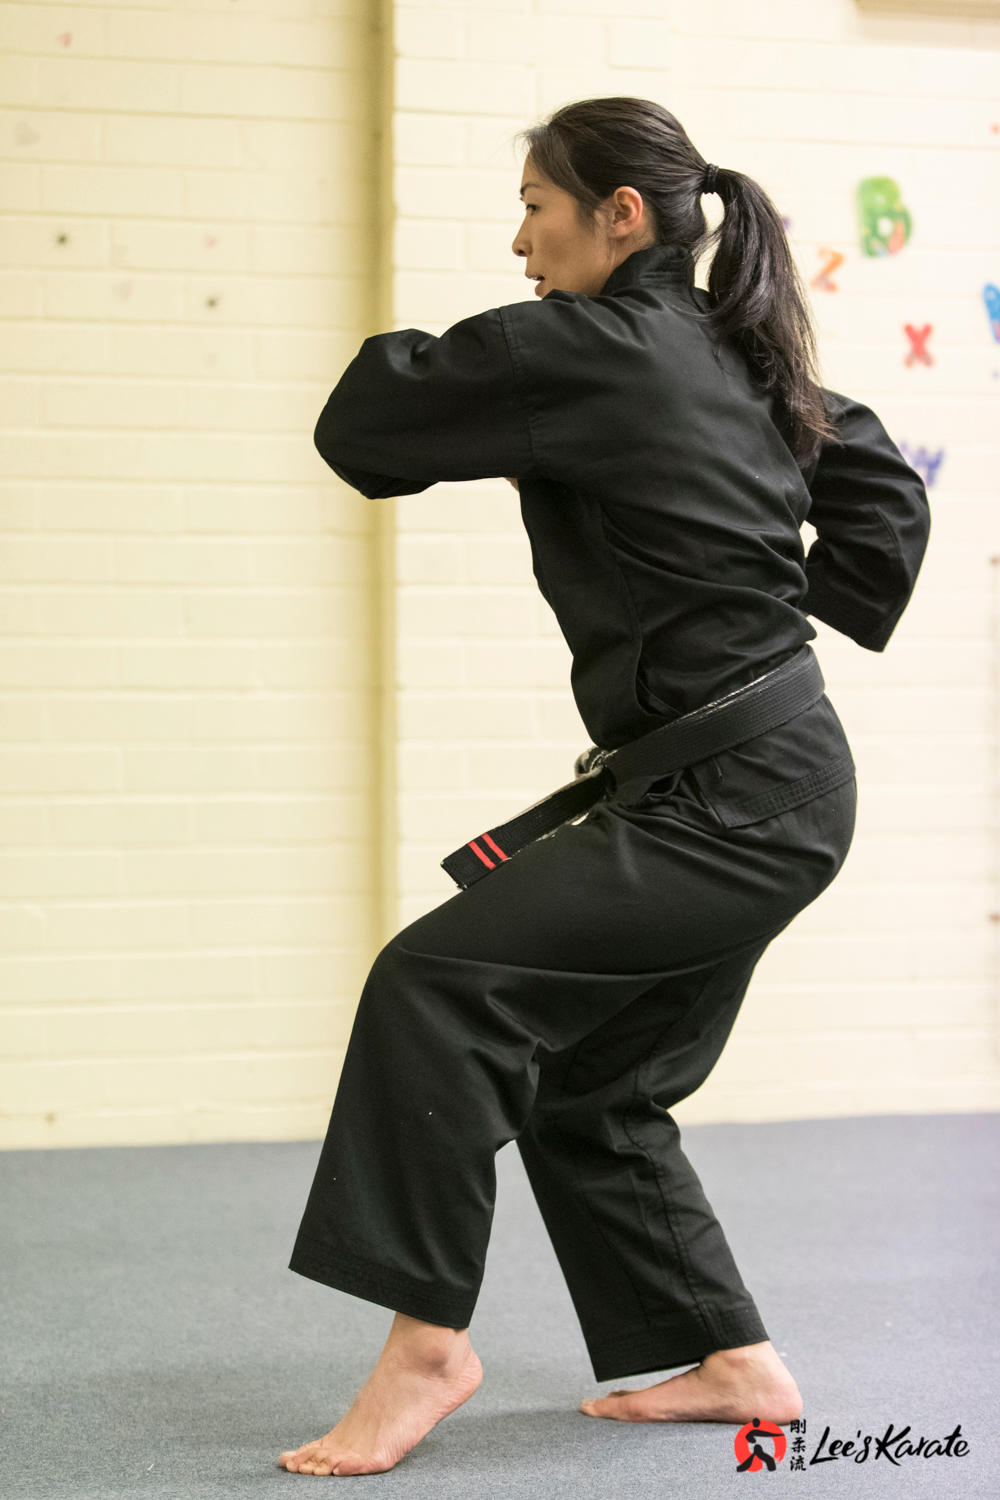 Images Lee's Karate